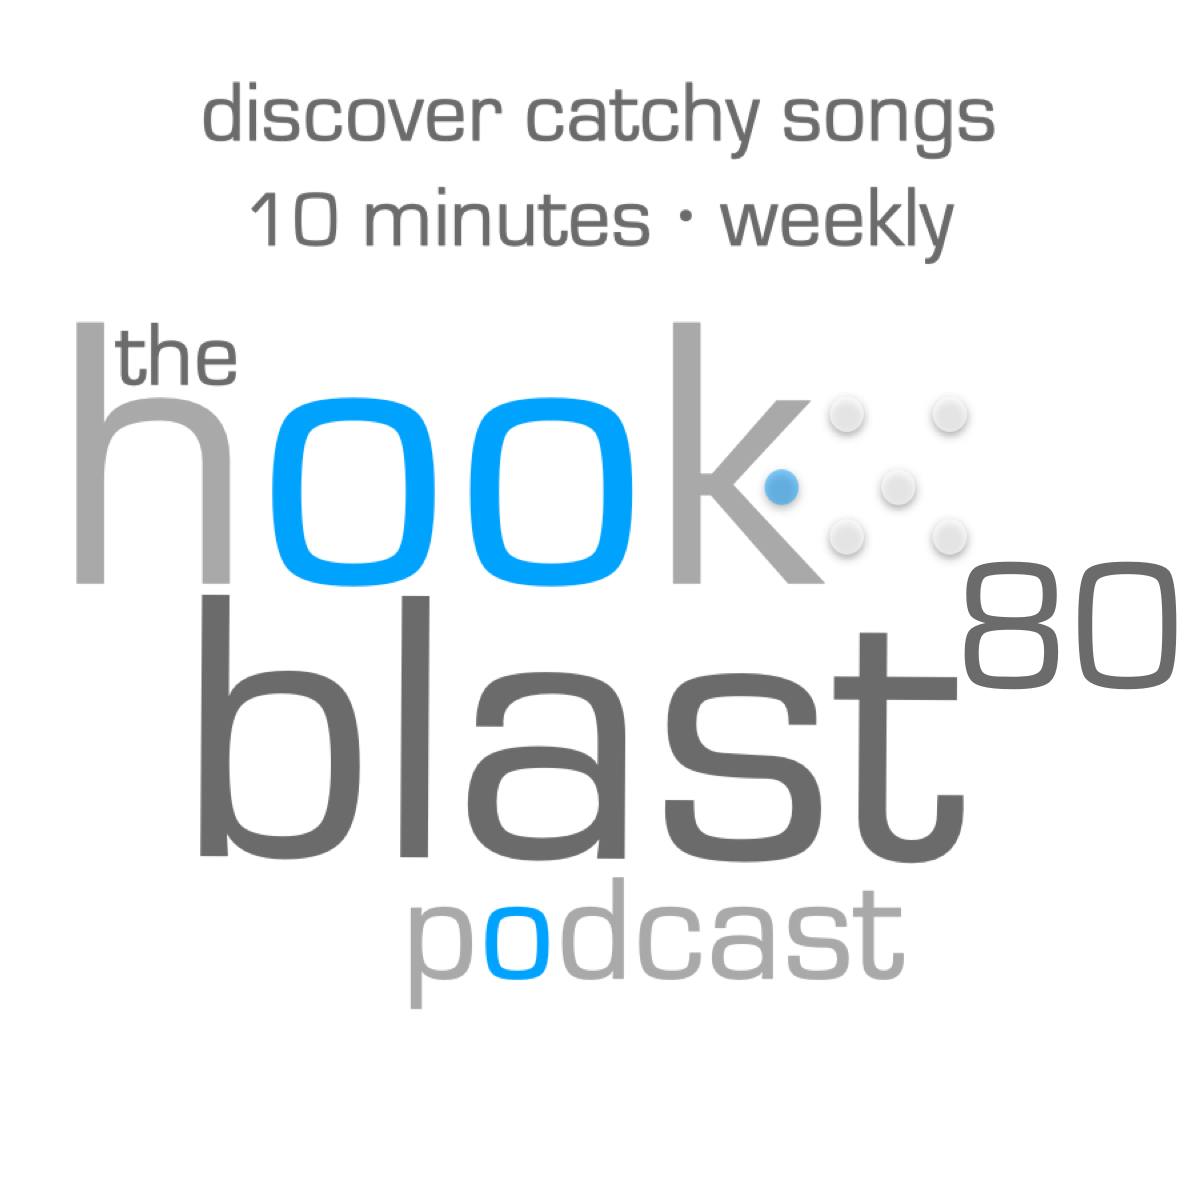 The Hookblast Podcast - Episode 80